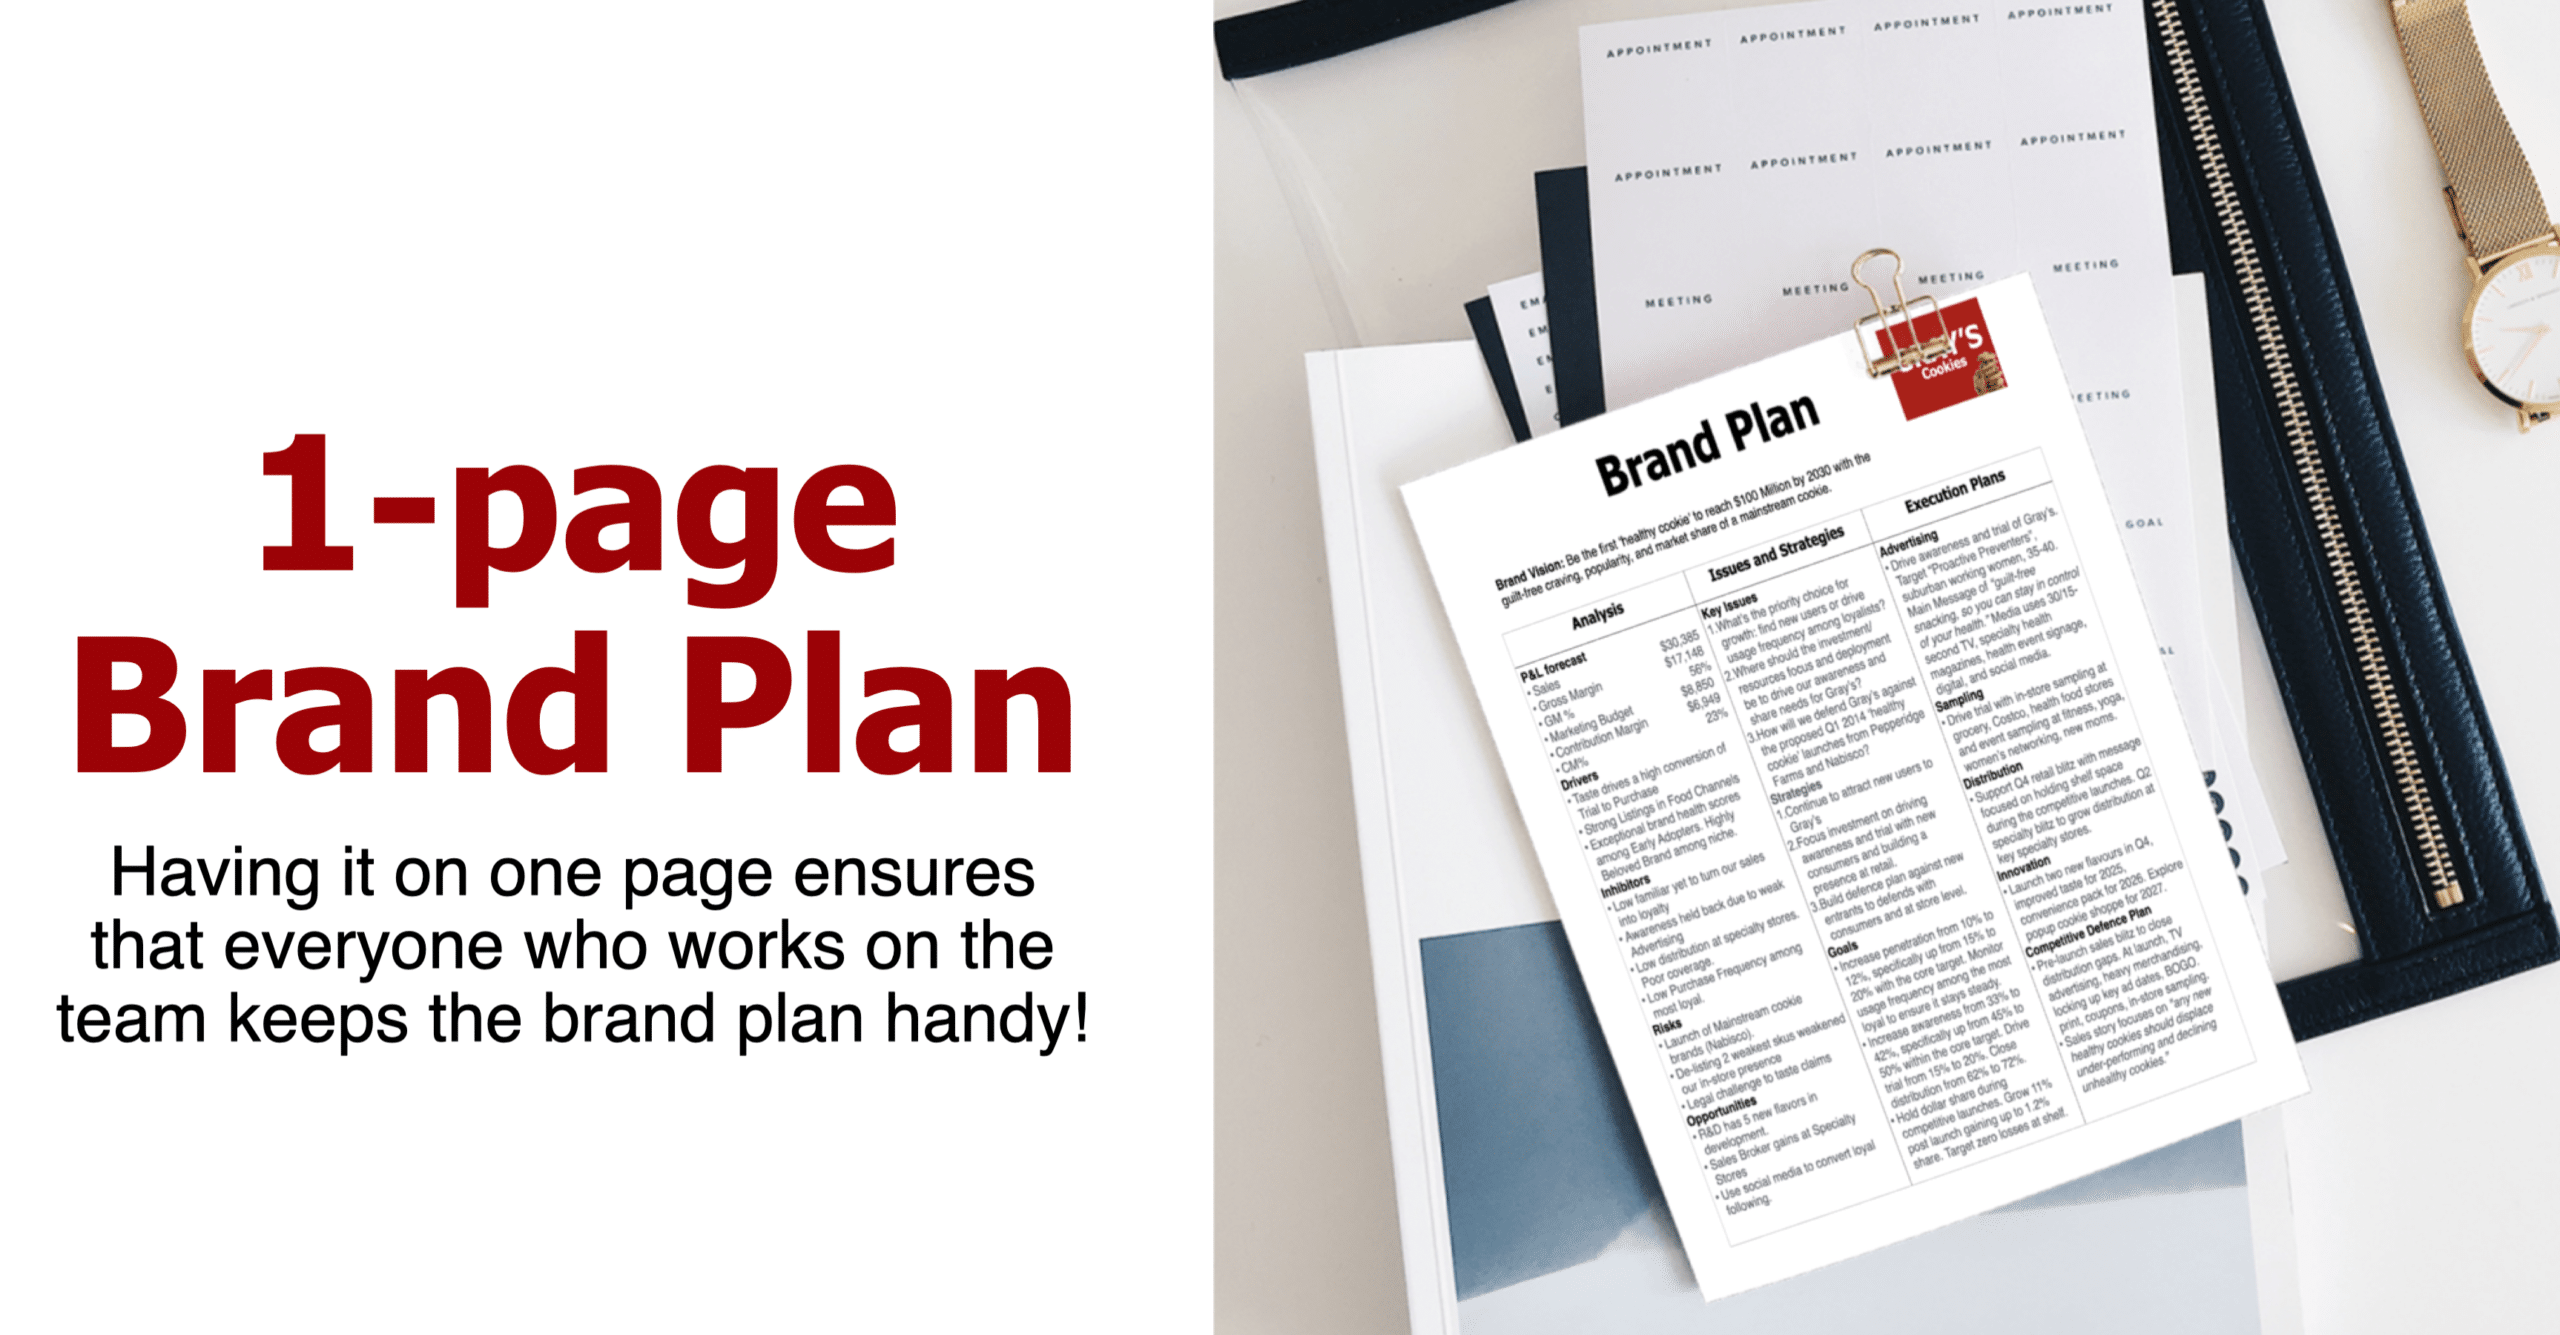 Keep the 1-page Brand Plan handy